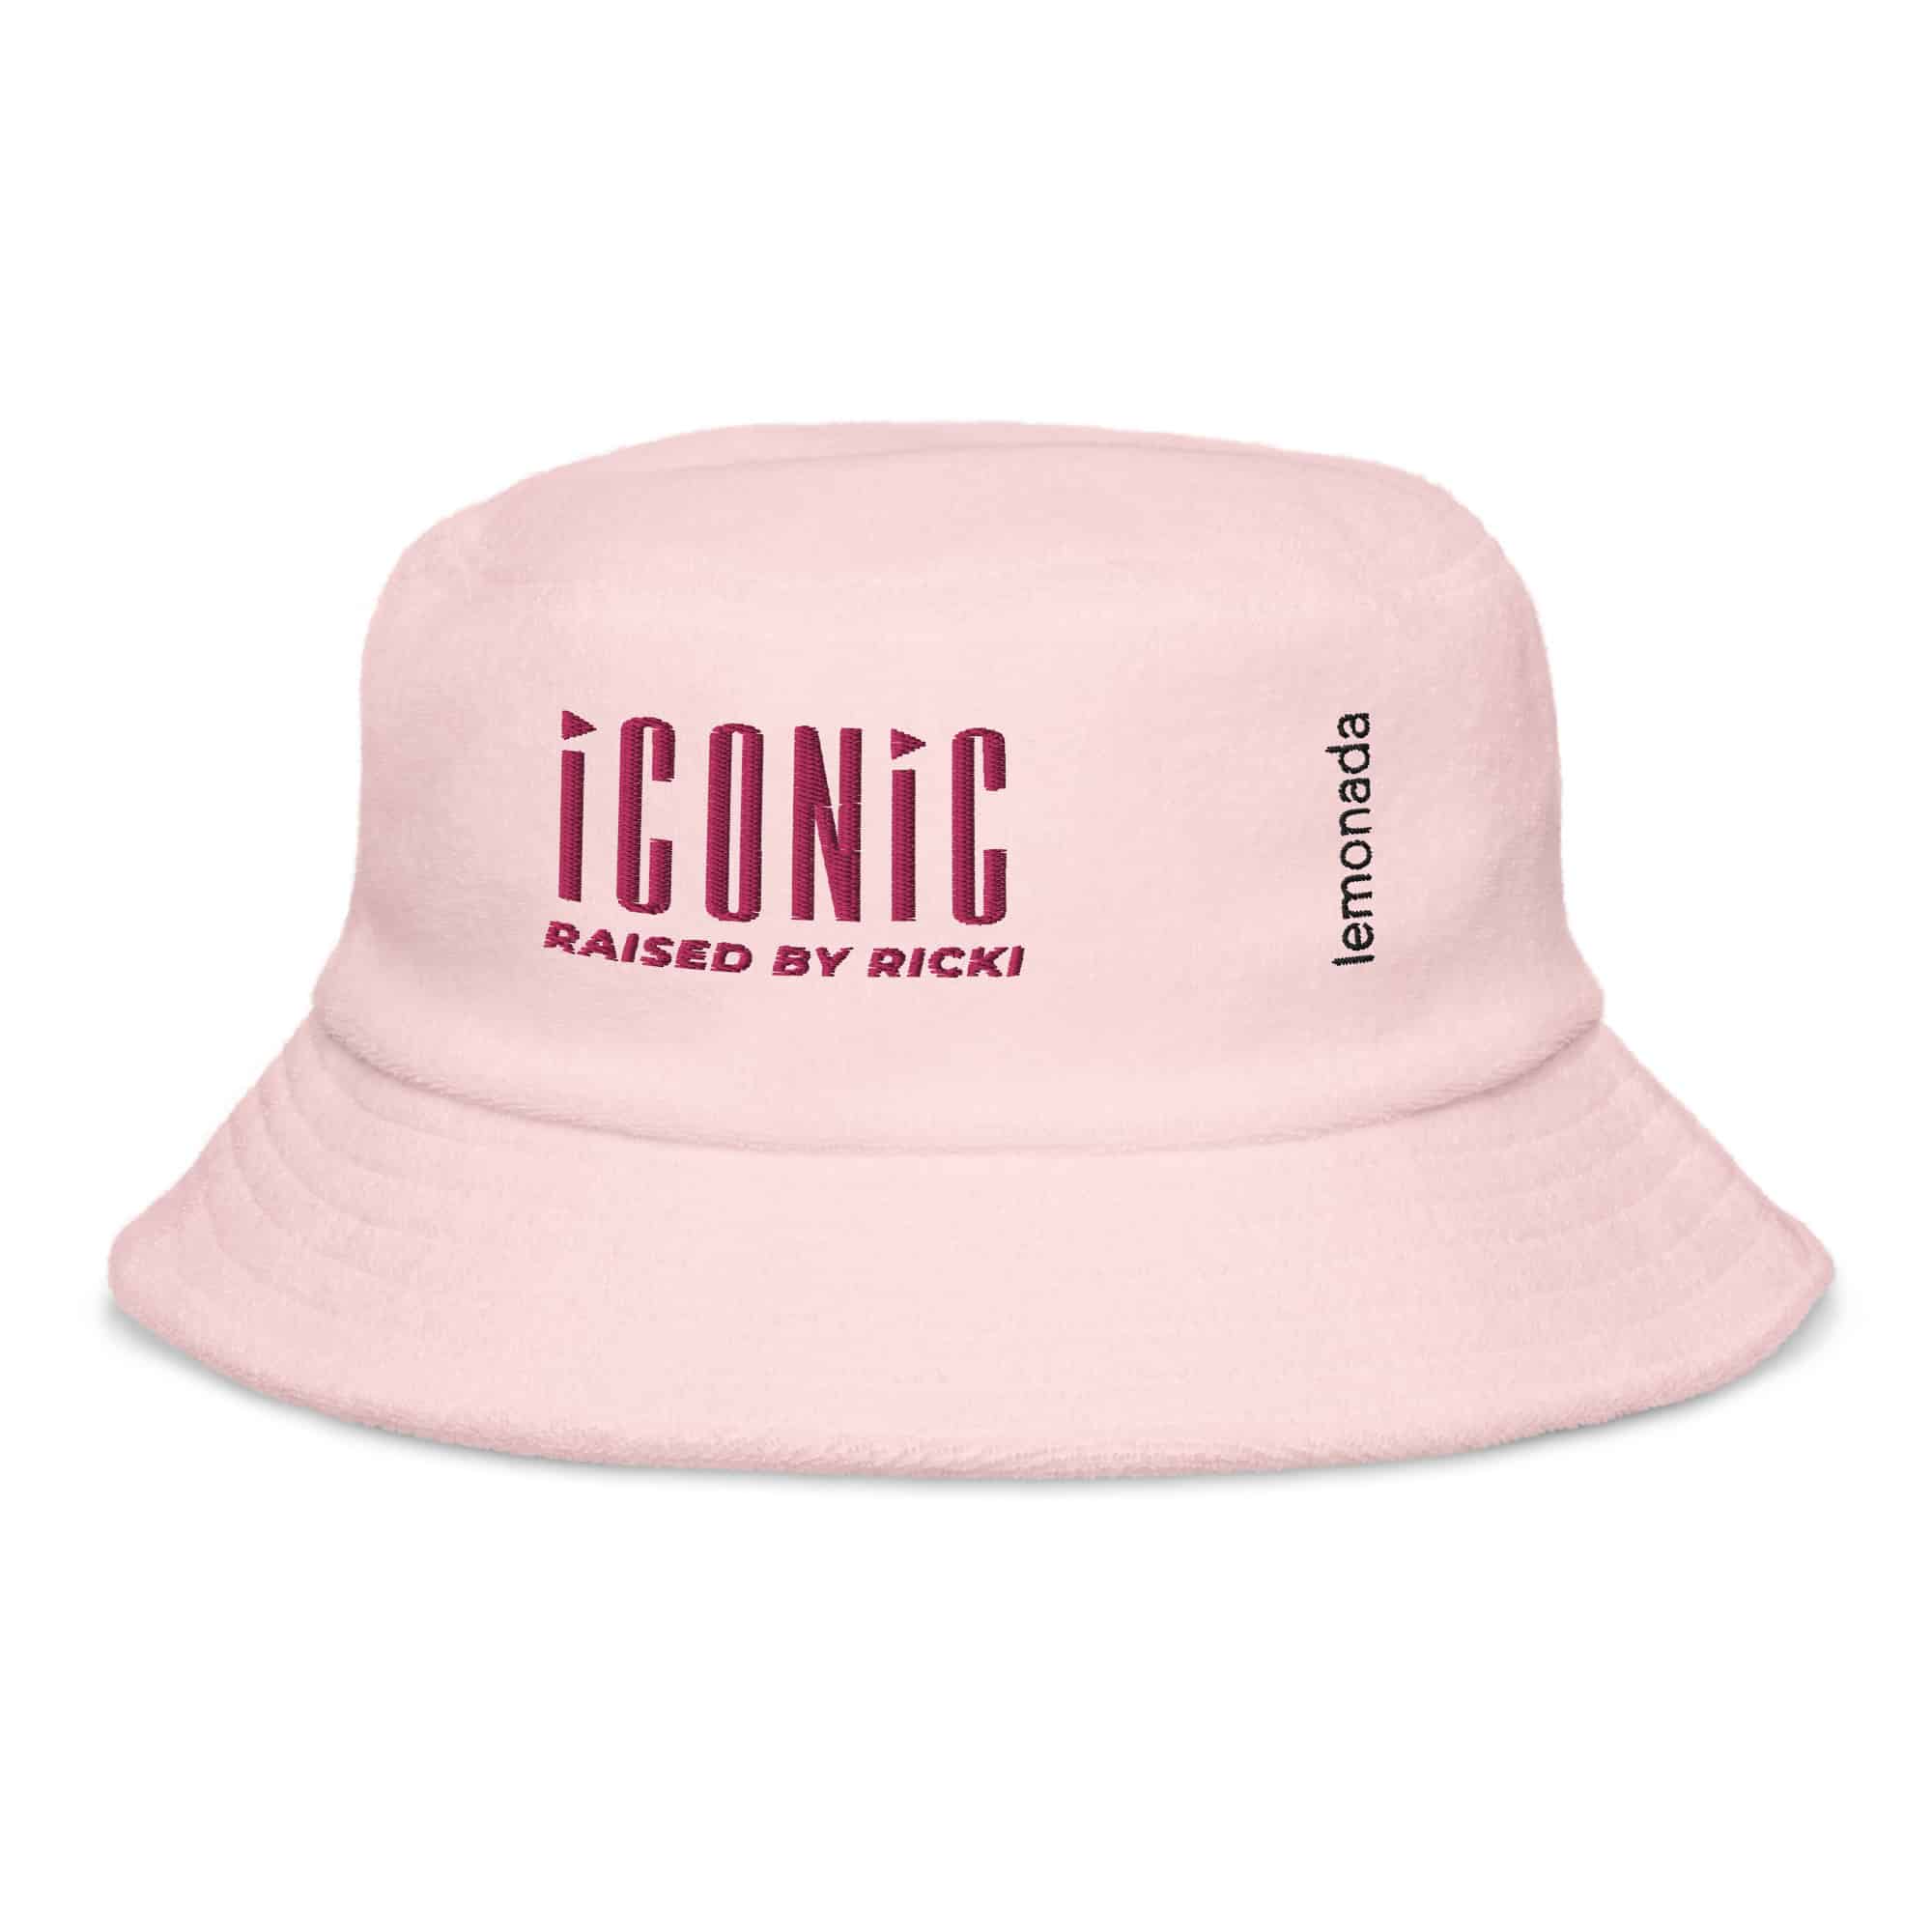 Iconic Raised By Ricki Bucket Hat